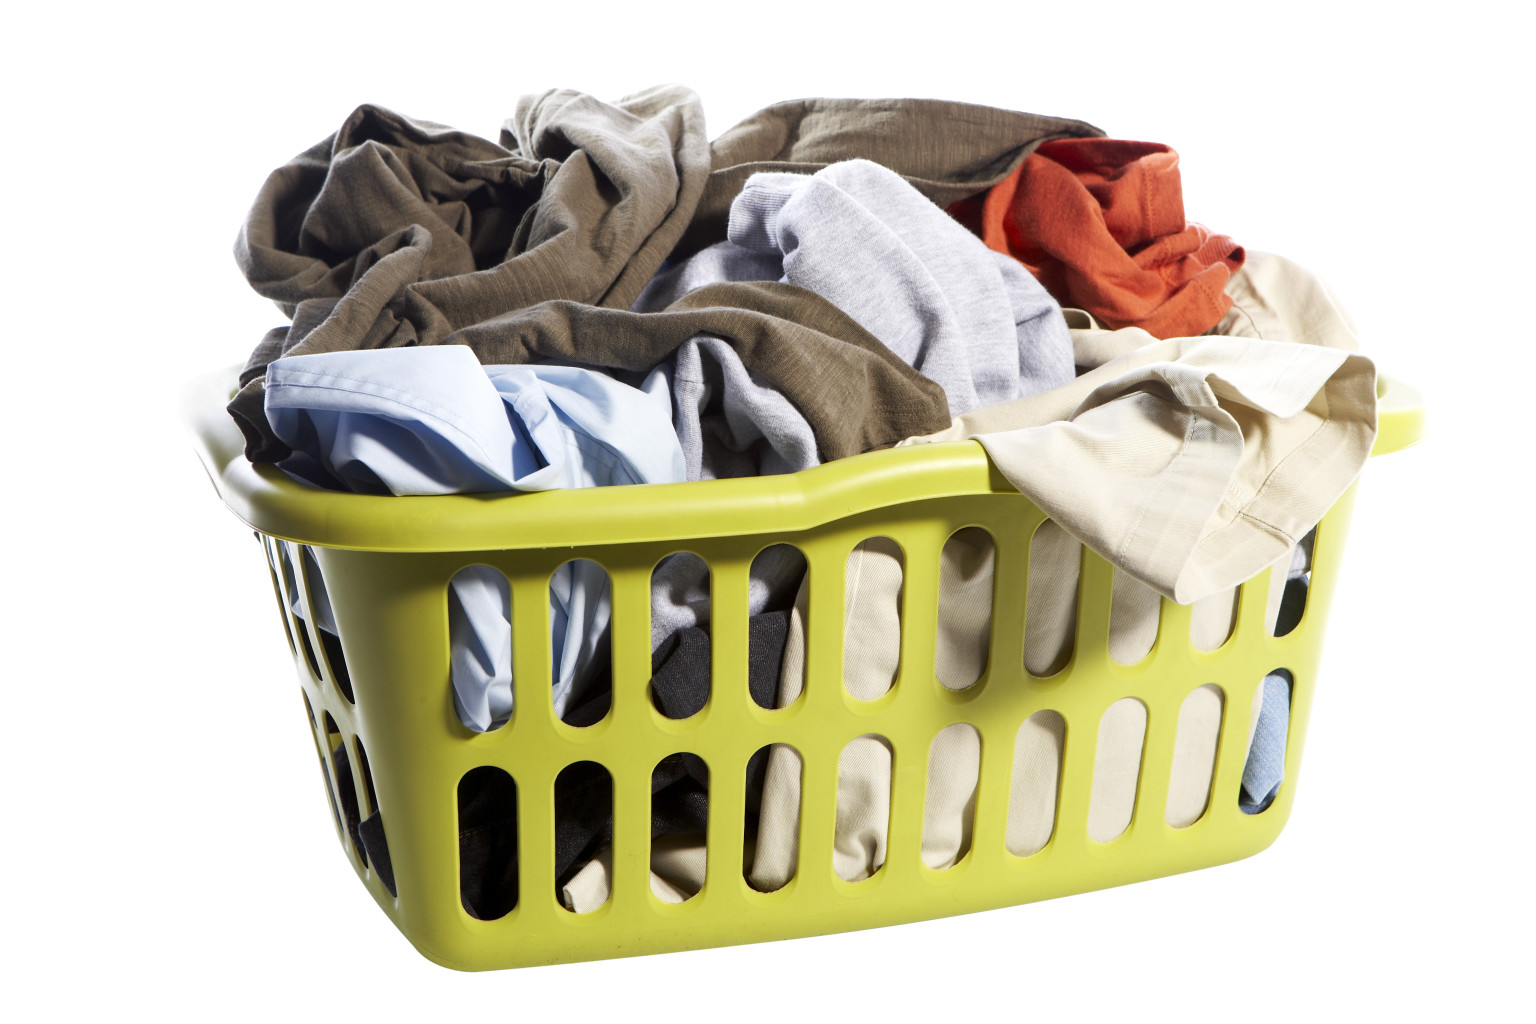 laundry clothes basket laundromat chapstick tricks blacker darker darks blacks simple stains casa remove simplify inside inspired